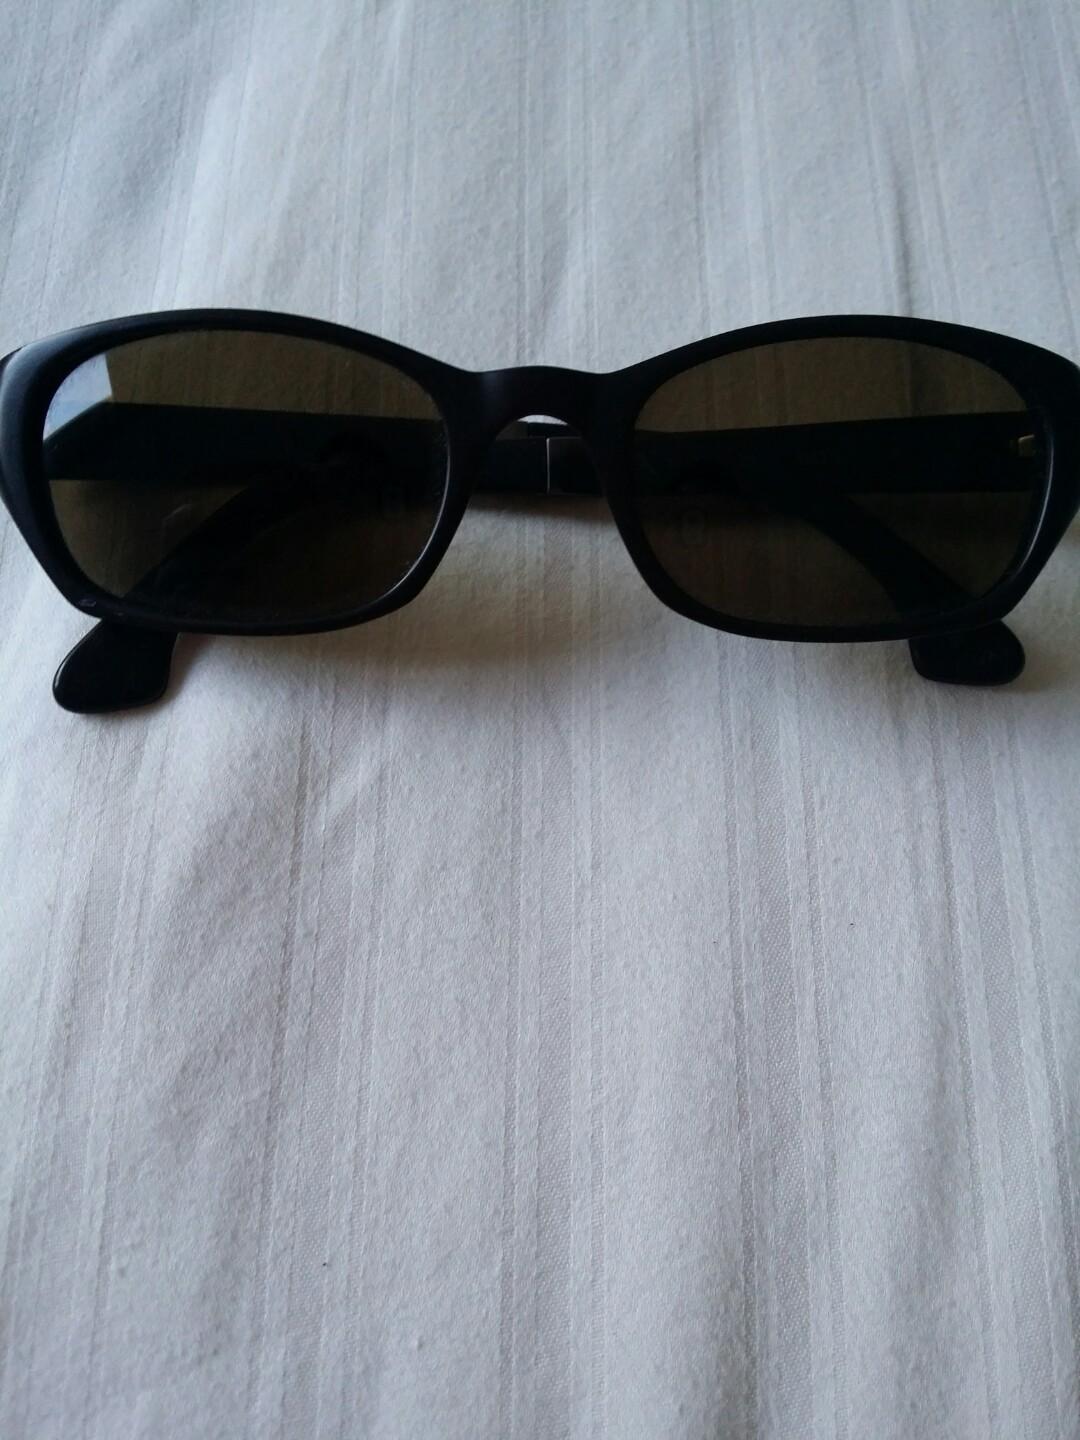 ck sunglasses womens